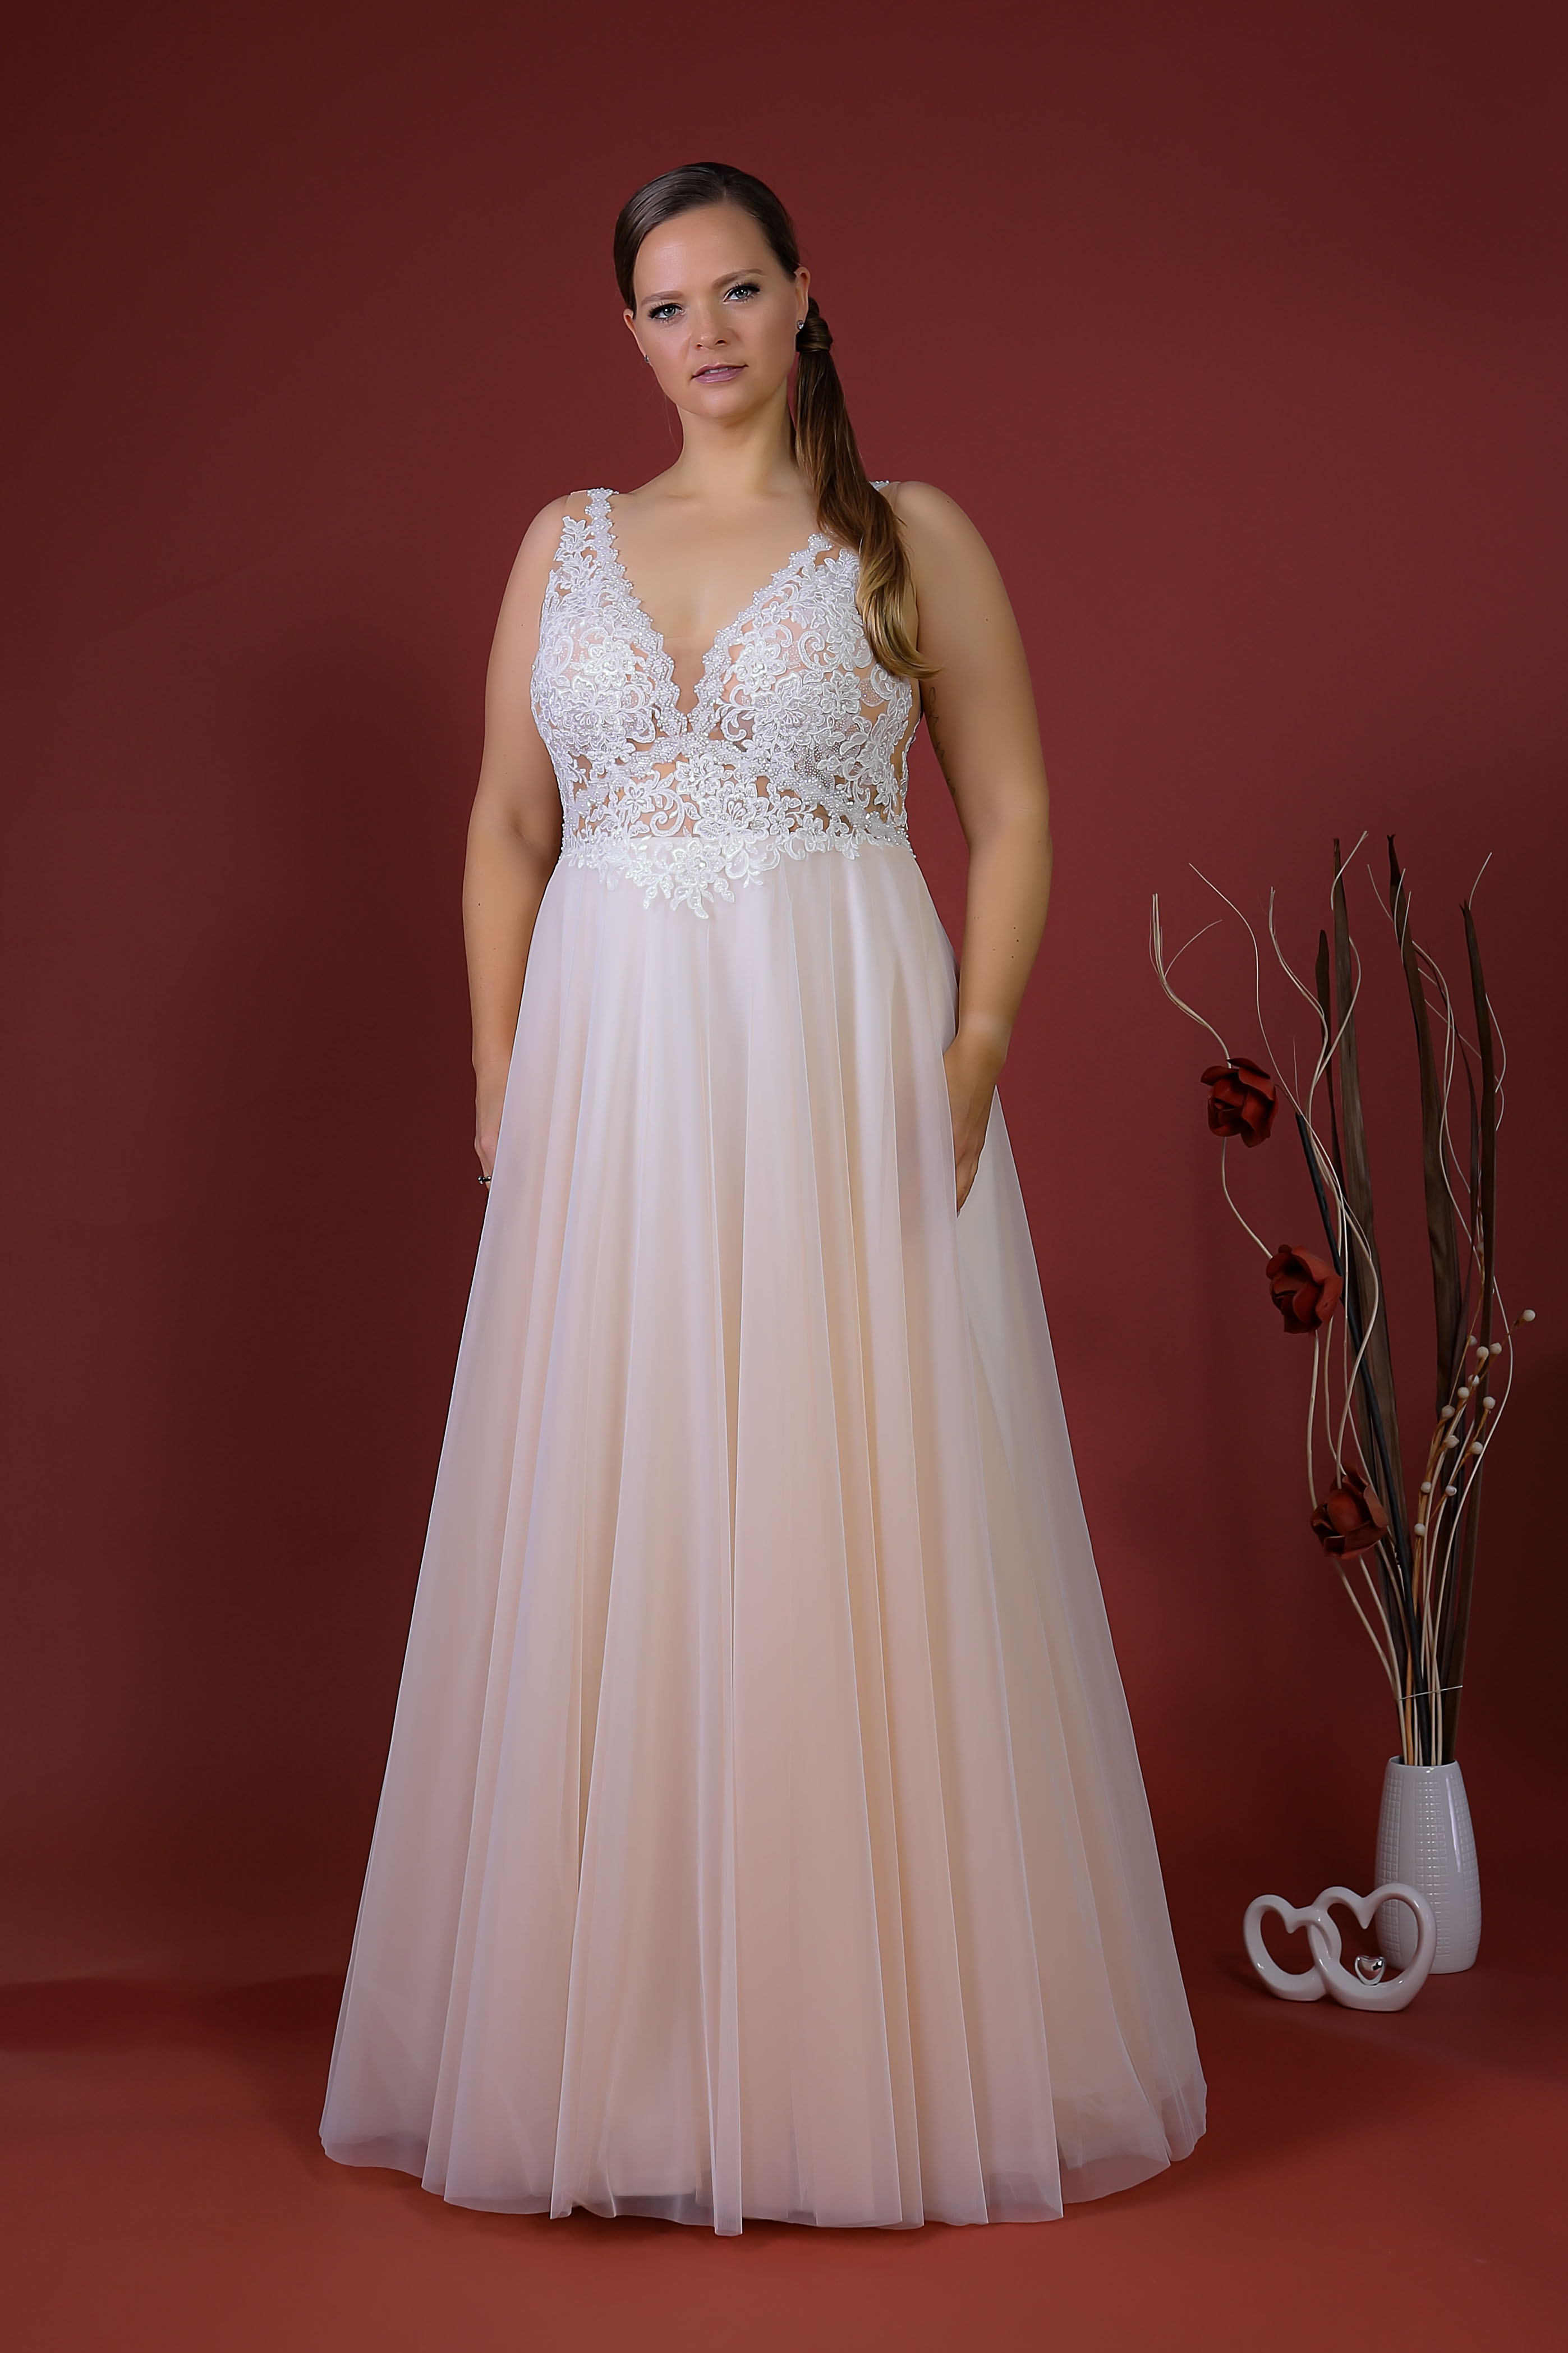 Schantal Brautkleid aus der Kollektion „Pilar XXL“, Modell 52003. Foto 3